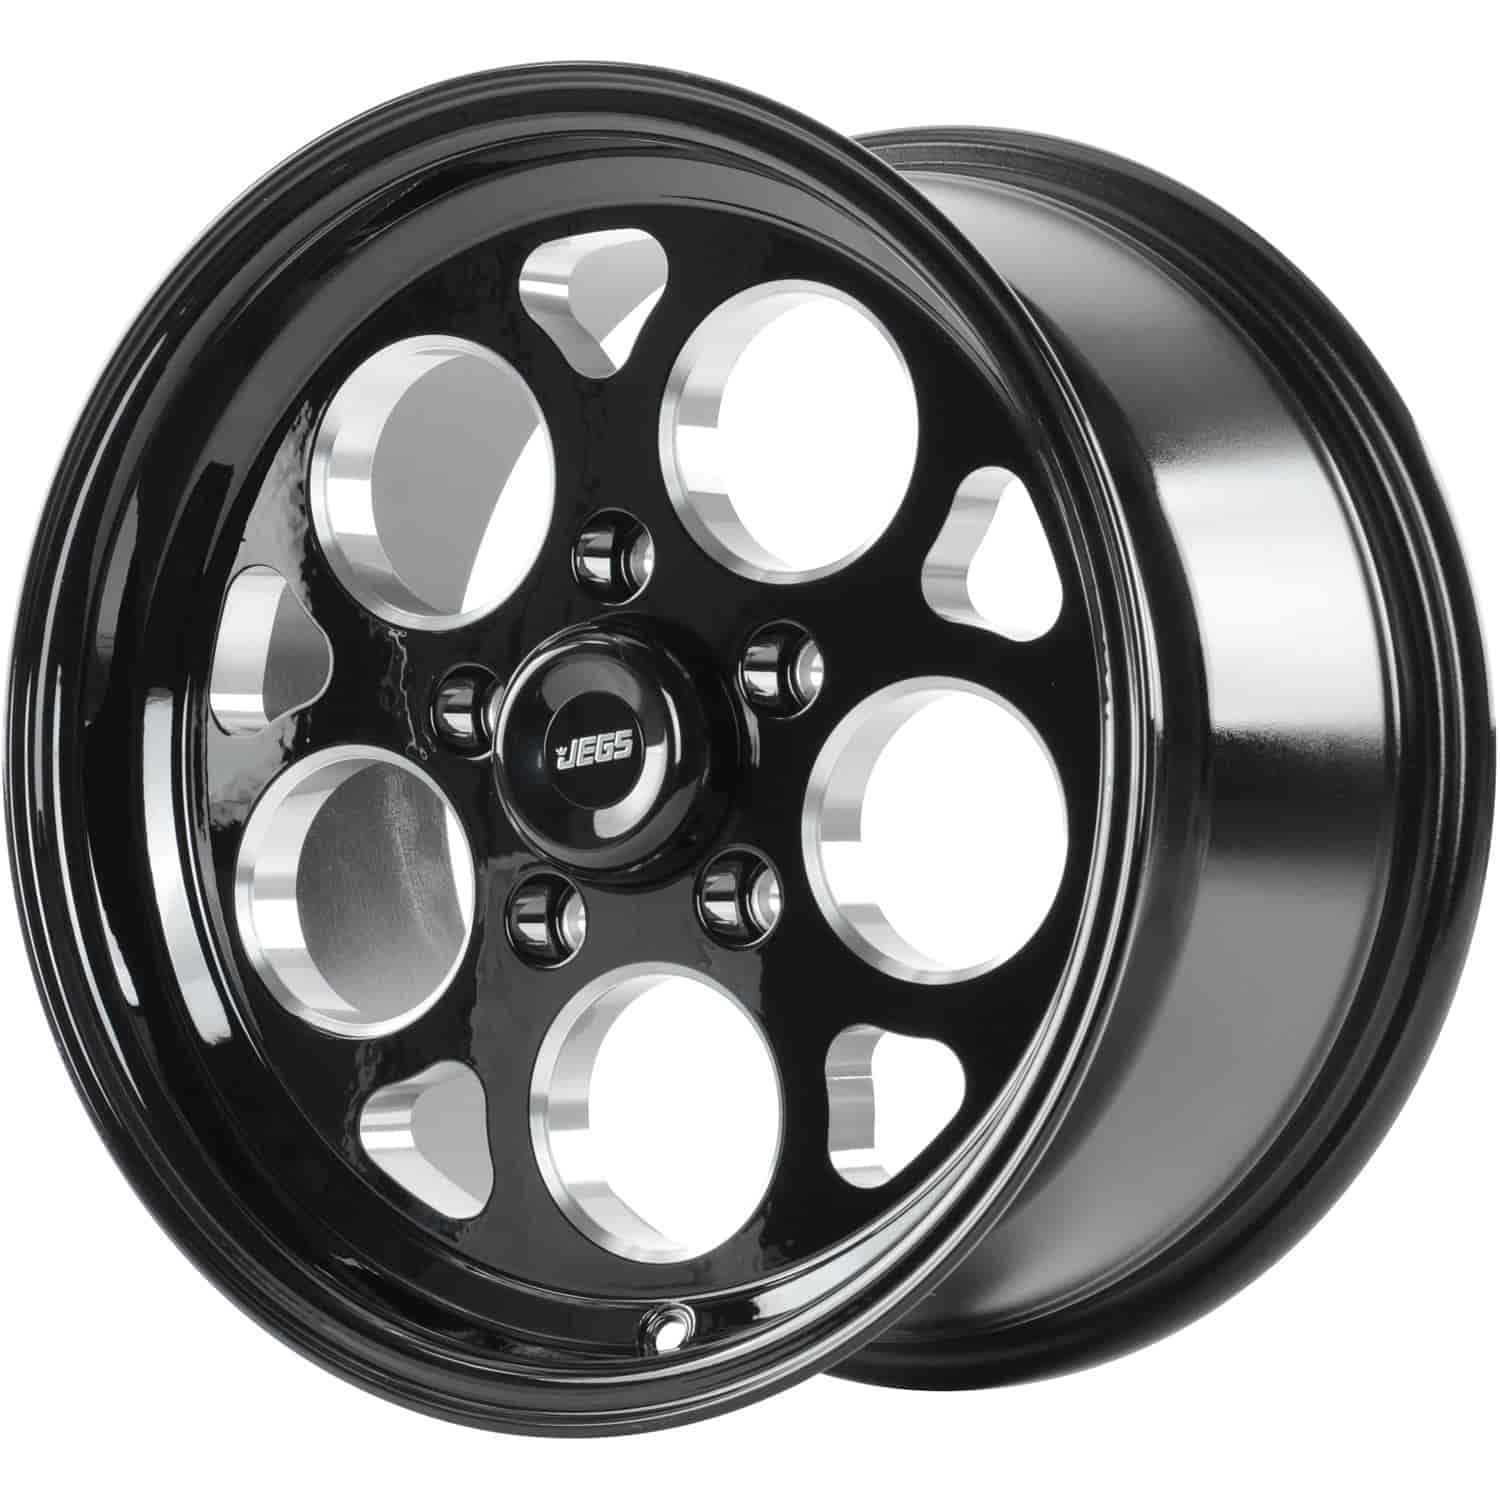 SSR Mag Wheel [Size: 15" x 8"] Black